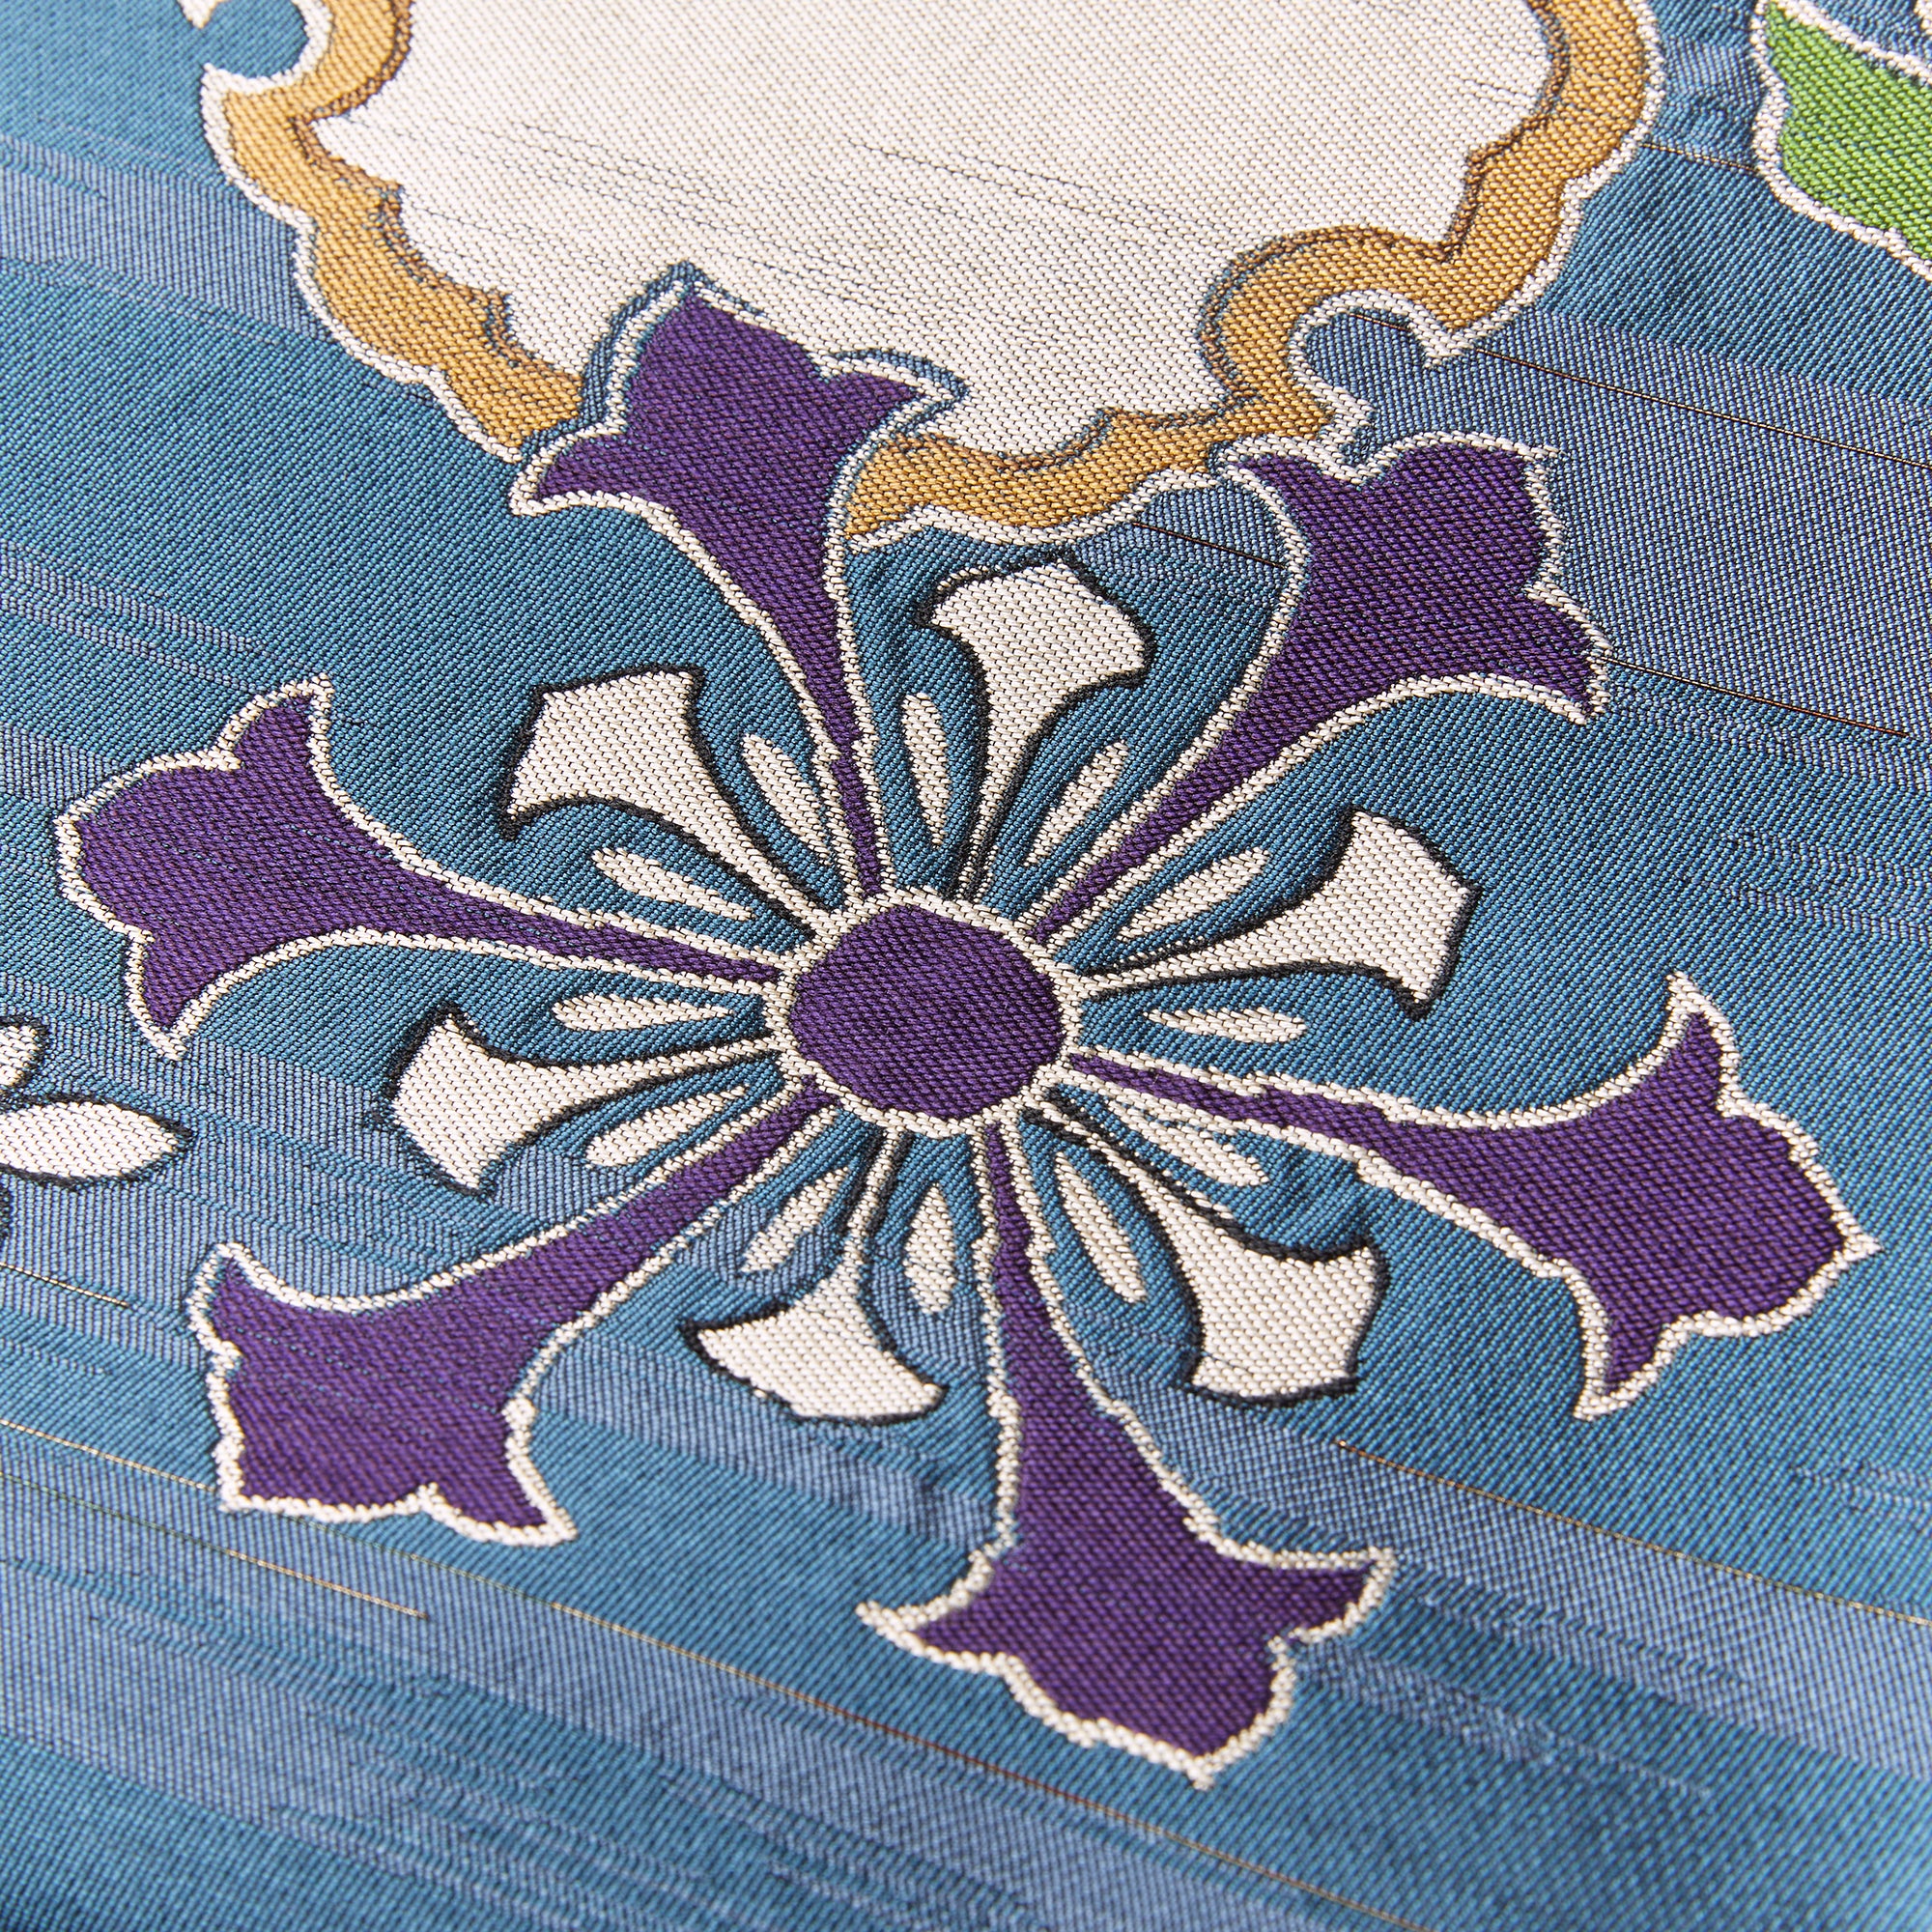 KAPUKI original bag obi Nishijin woven "Snow flower pattern"